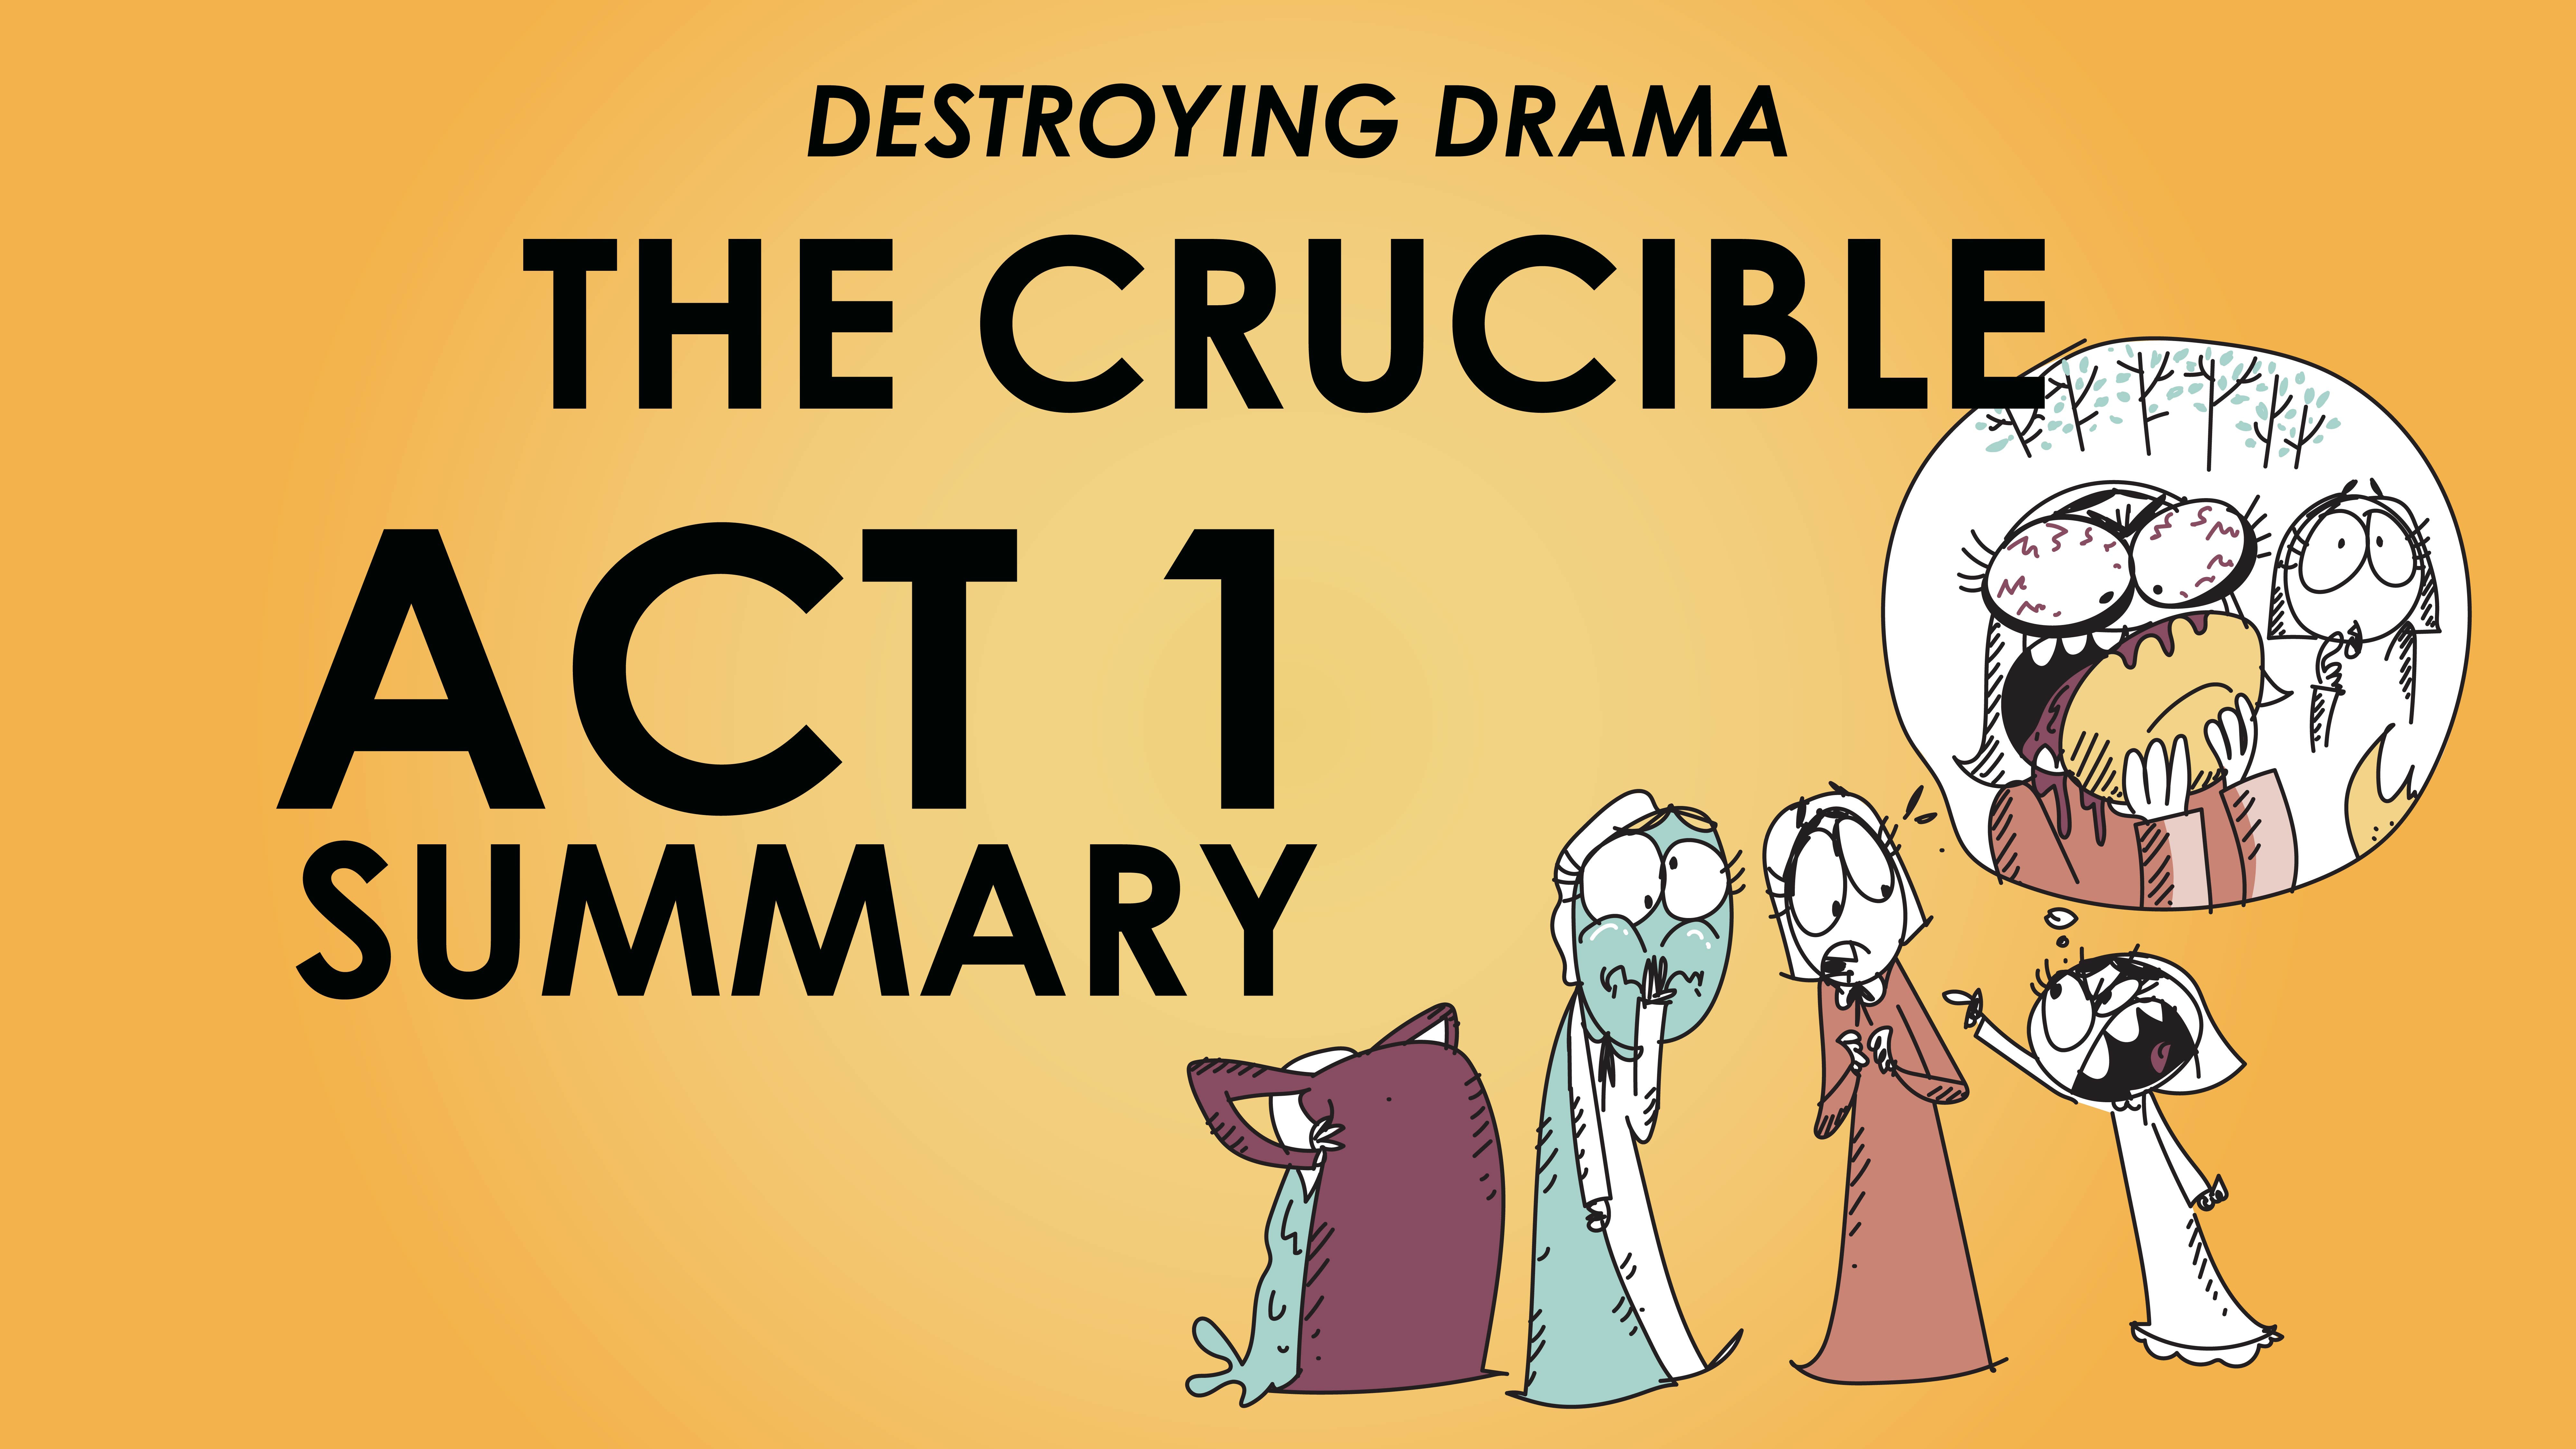 The Crucible - Arthur Miller - Act 1 Summary - Destroying Drama Series 